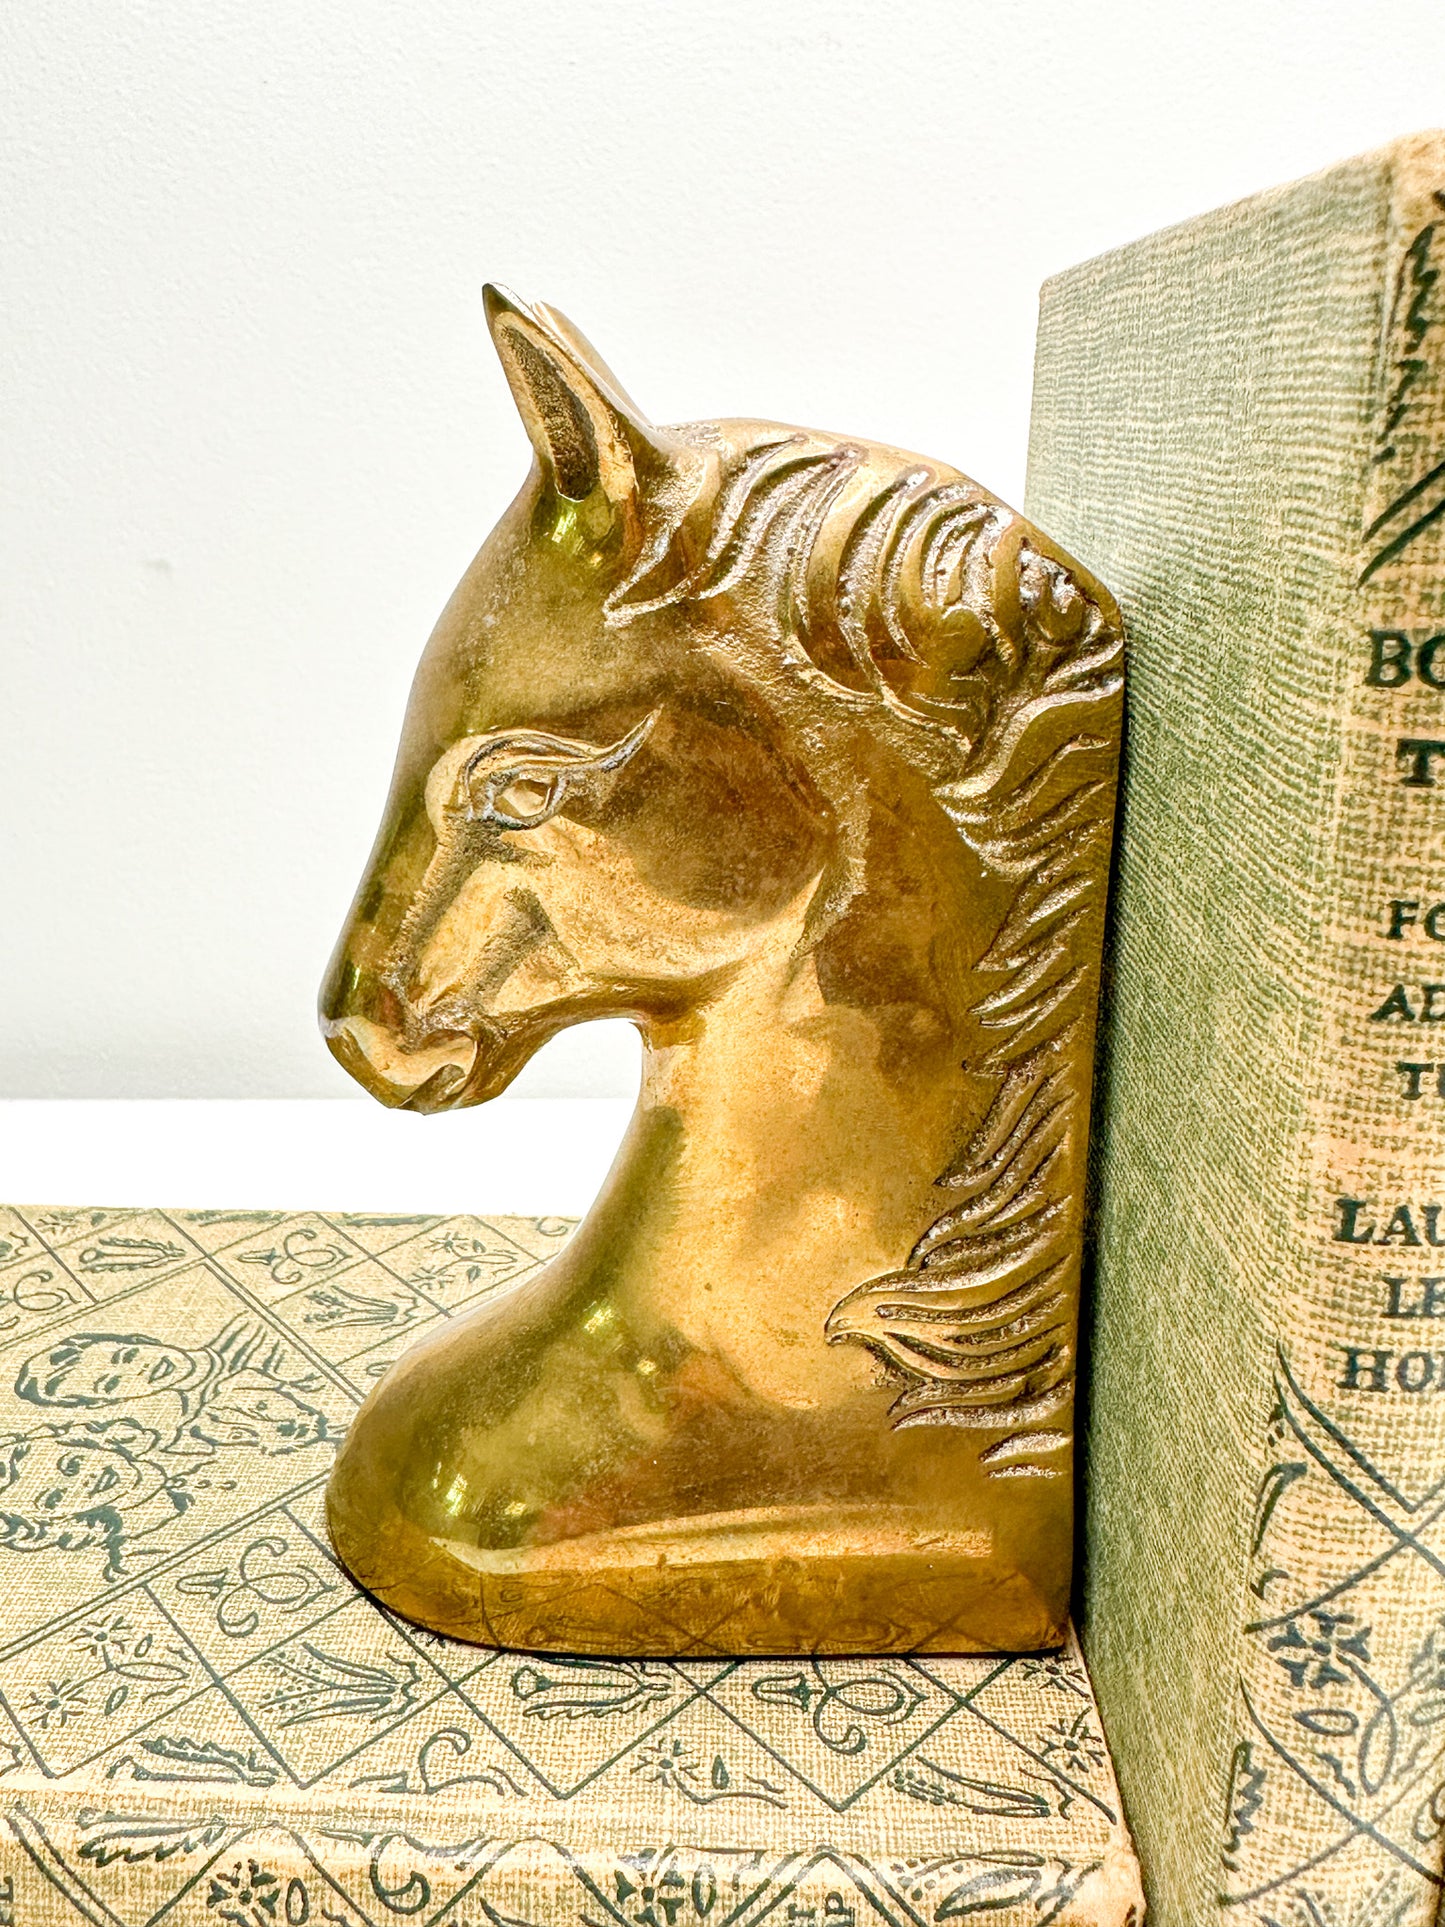 Brass Horse Head Book Ends| Solid Brass Horsehead Book|